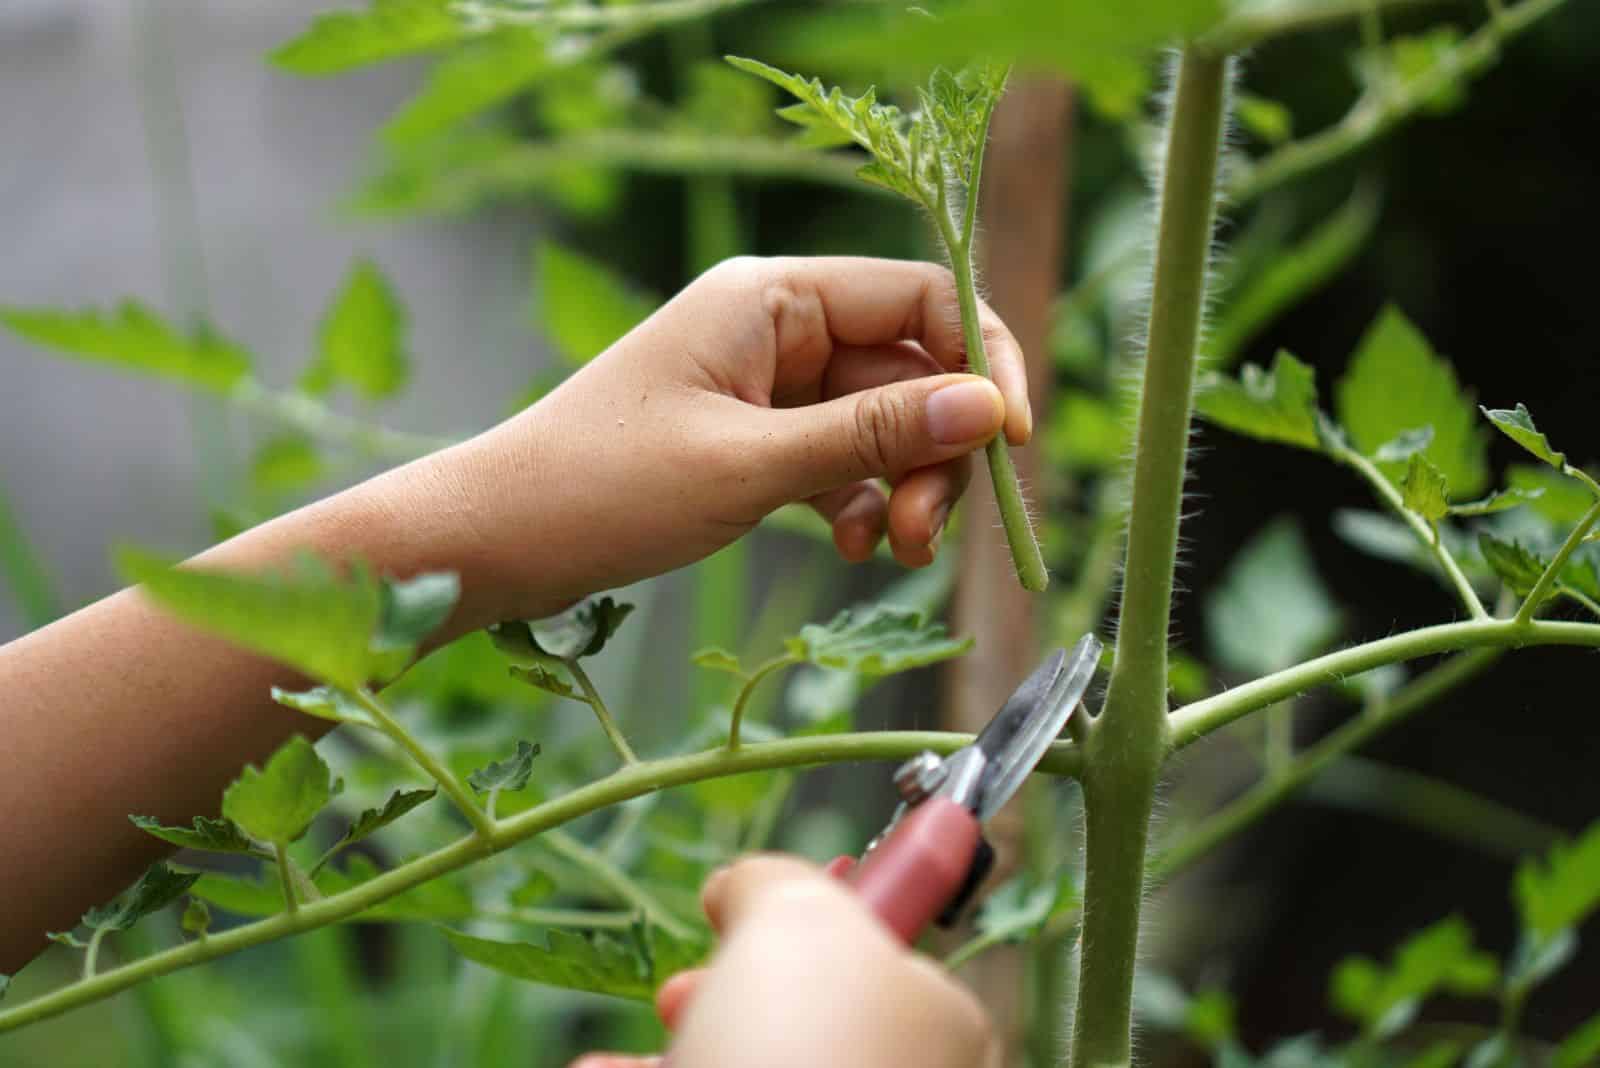 a woman cuts a tomato stem